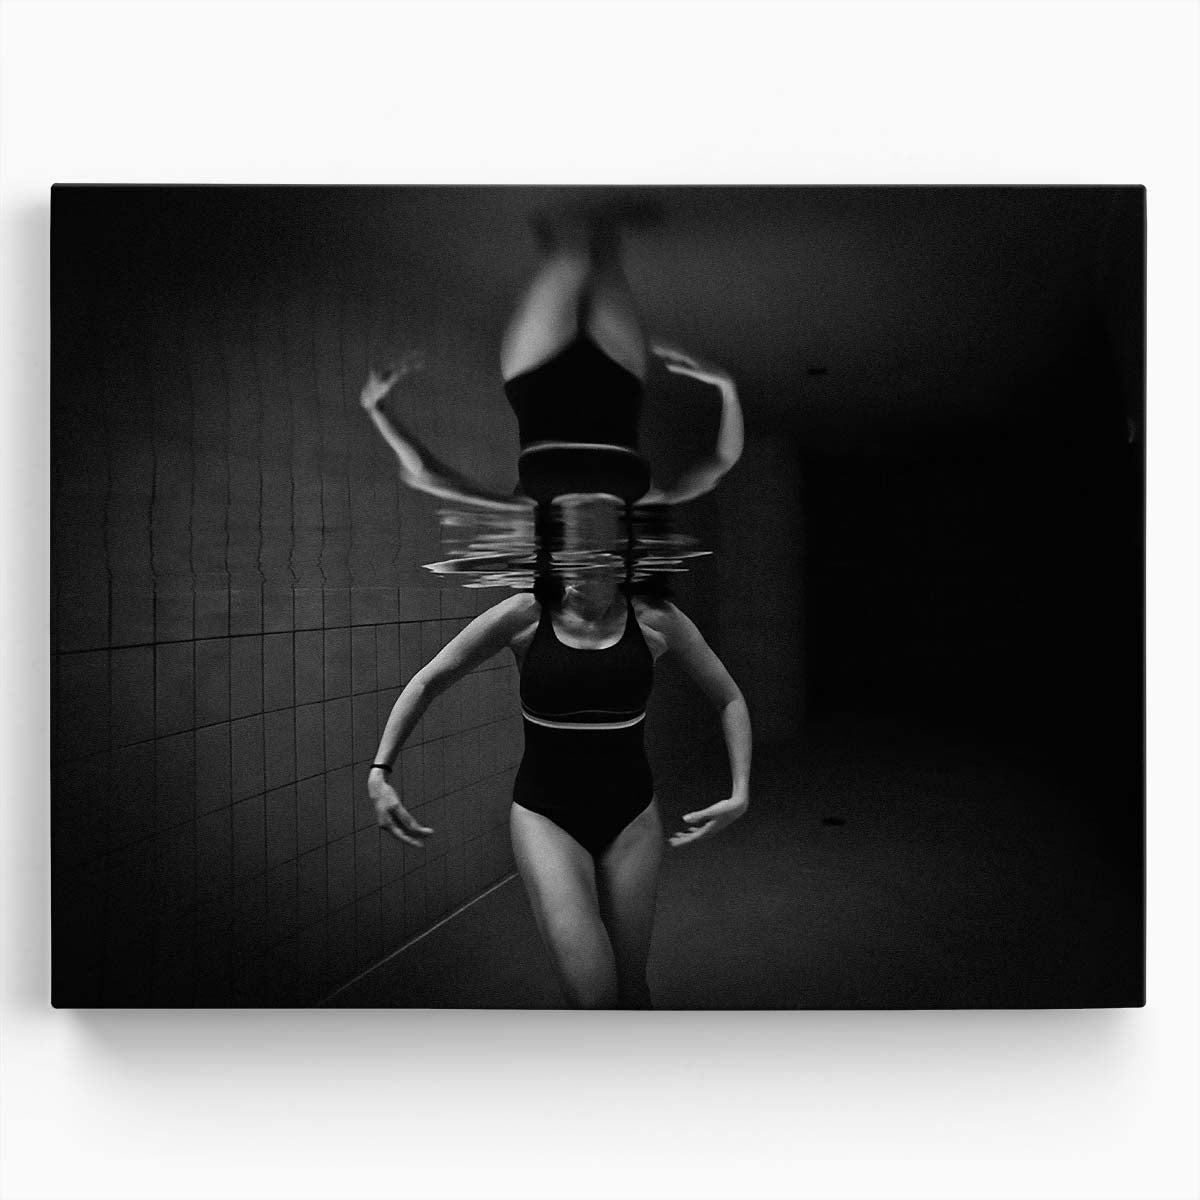 Monochrome Underwater Ballerina Portrait - Black & White Photography Wall Art by Luxuriance Designs. Made in USA.